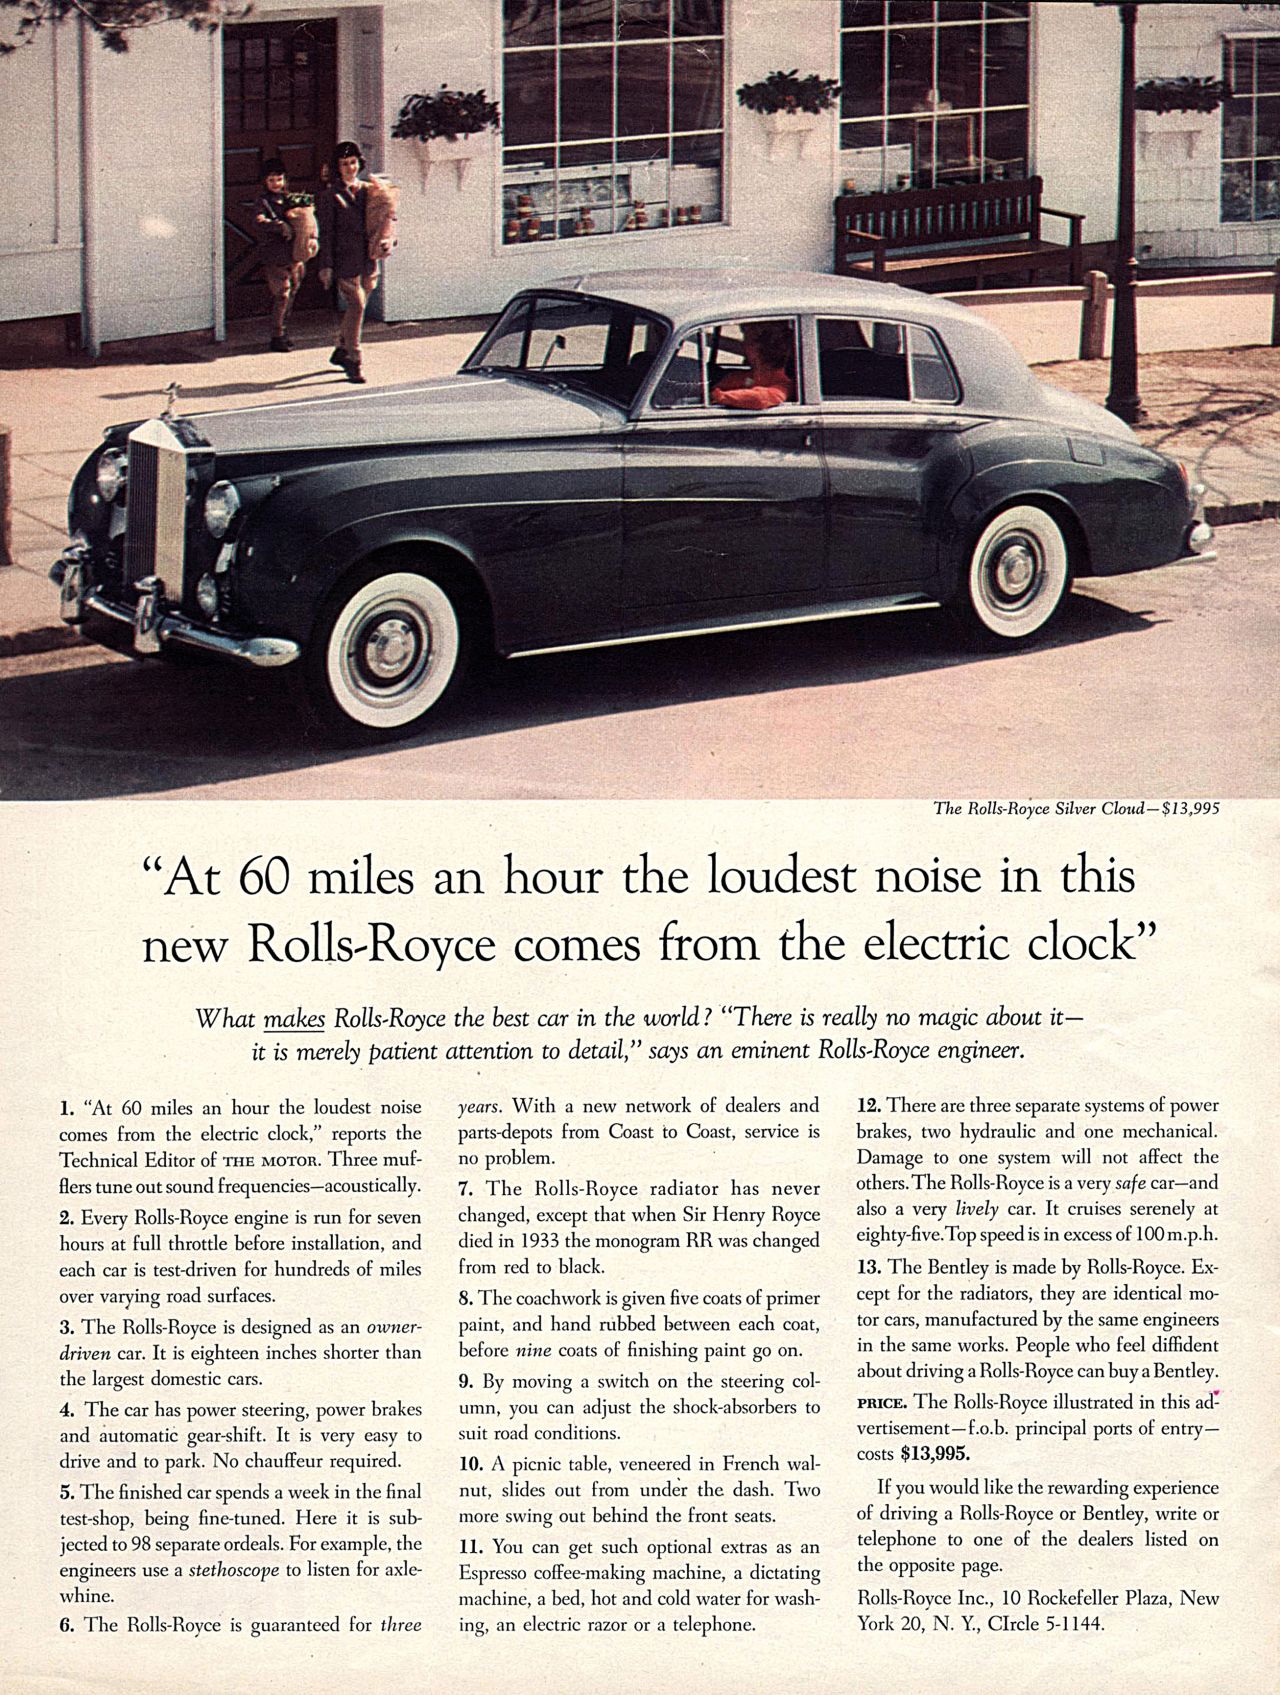 A vintage Rolls-Royce ad.